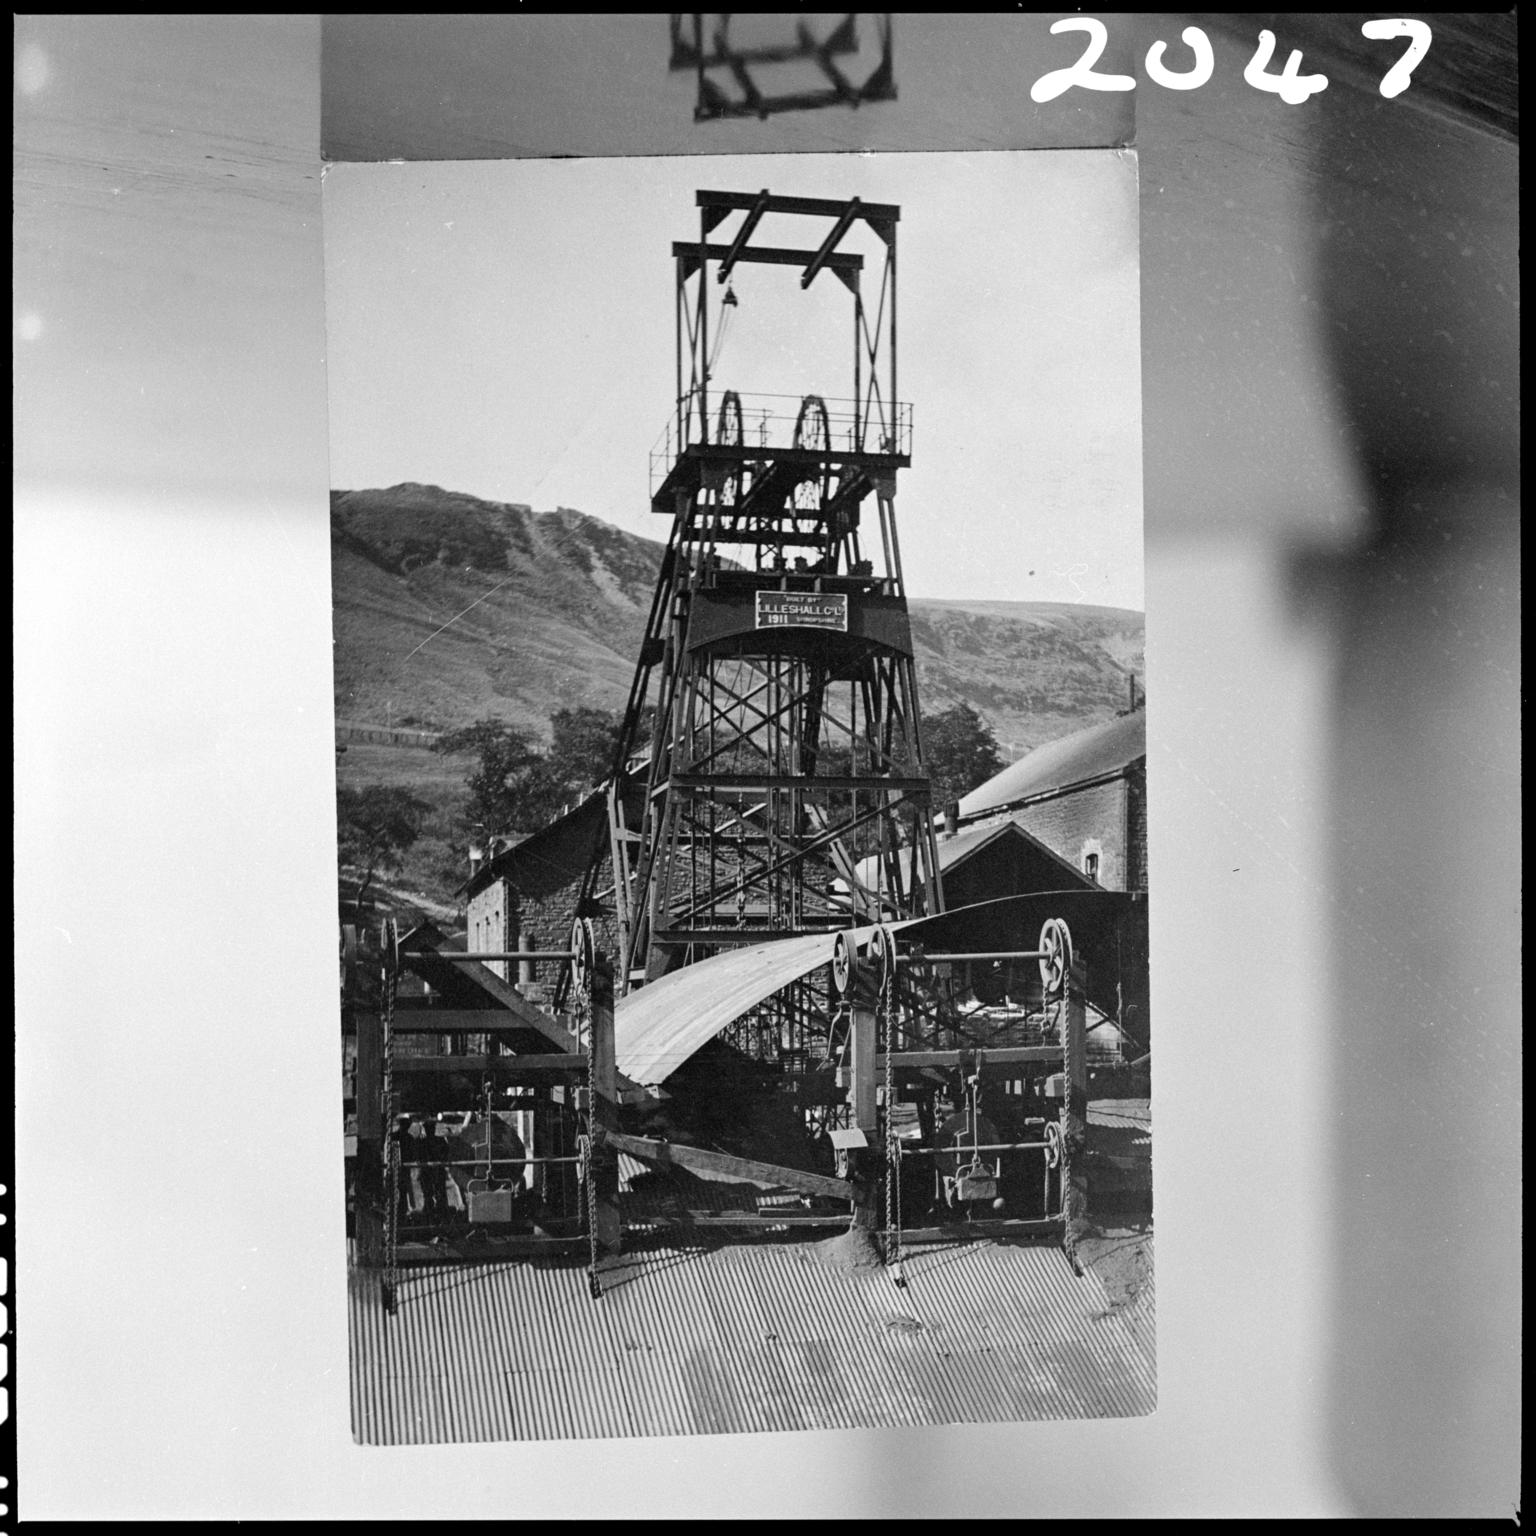 Ferndale Colliery, film negative